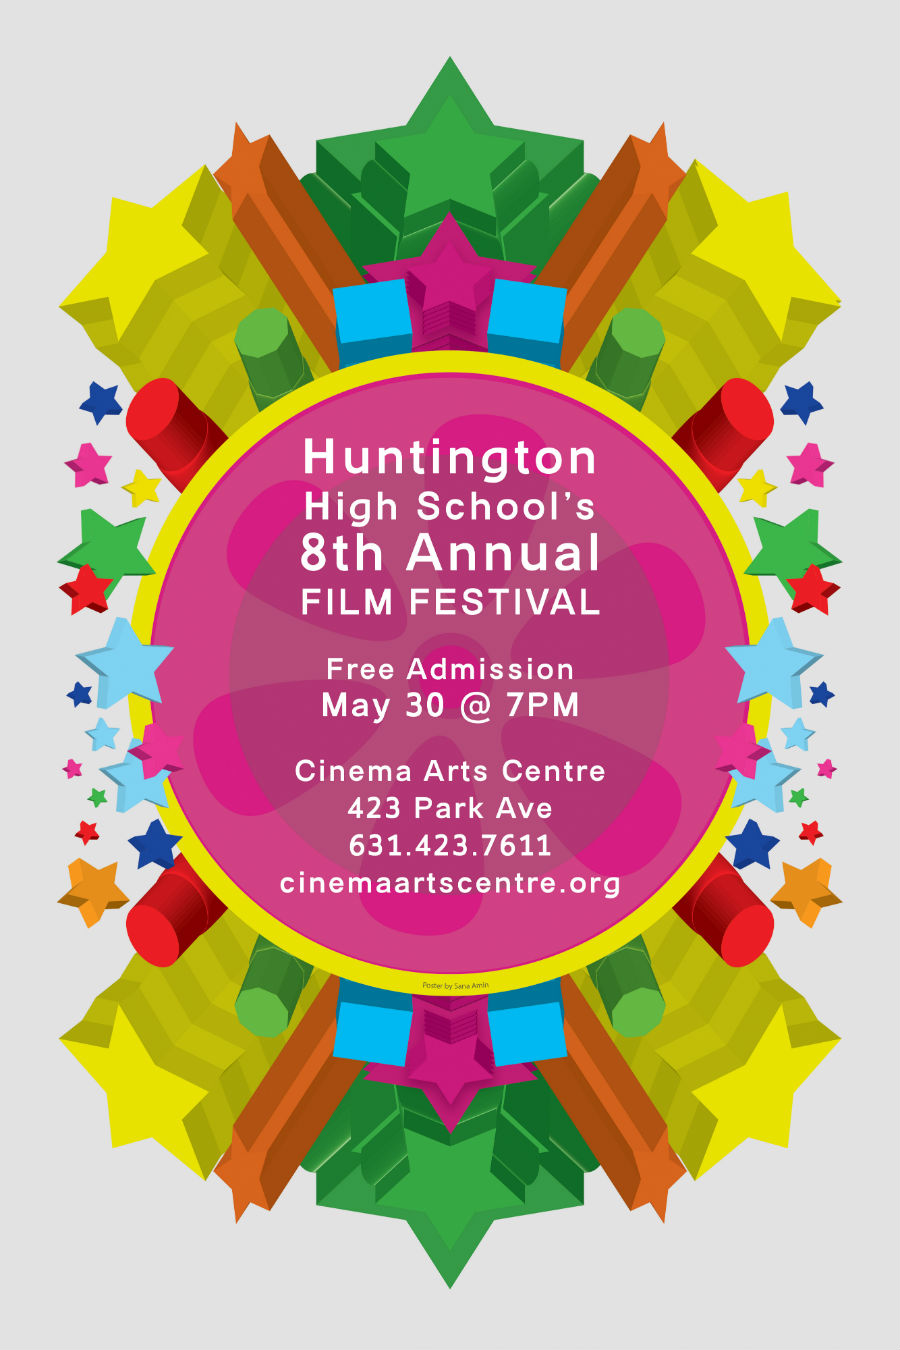 Cinema Arts Centre Huntington High School’s 8th Annual Film Festival